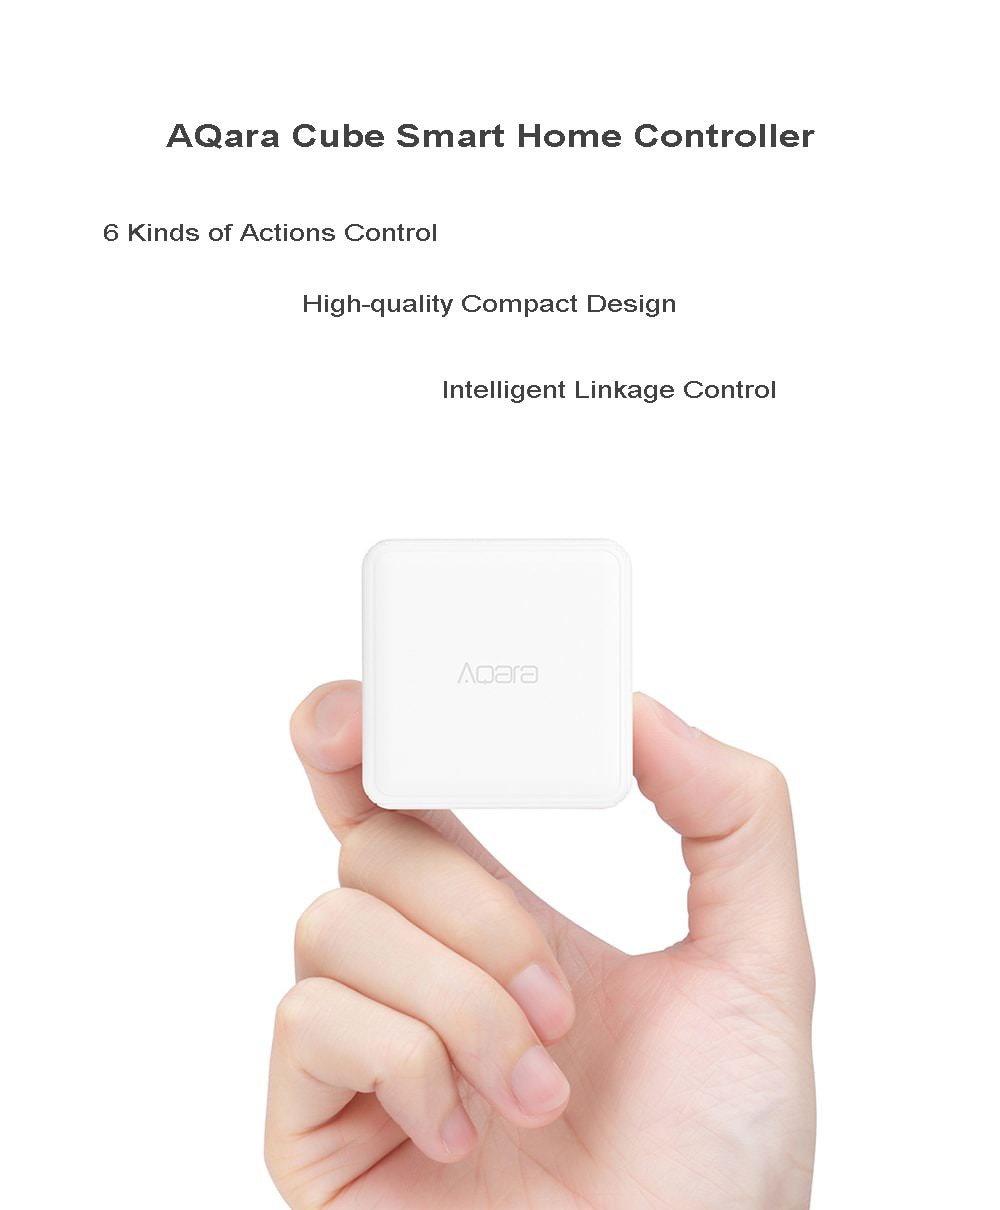 AQara Cube Smart Home Controller